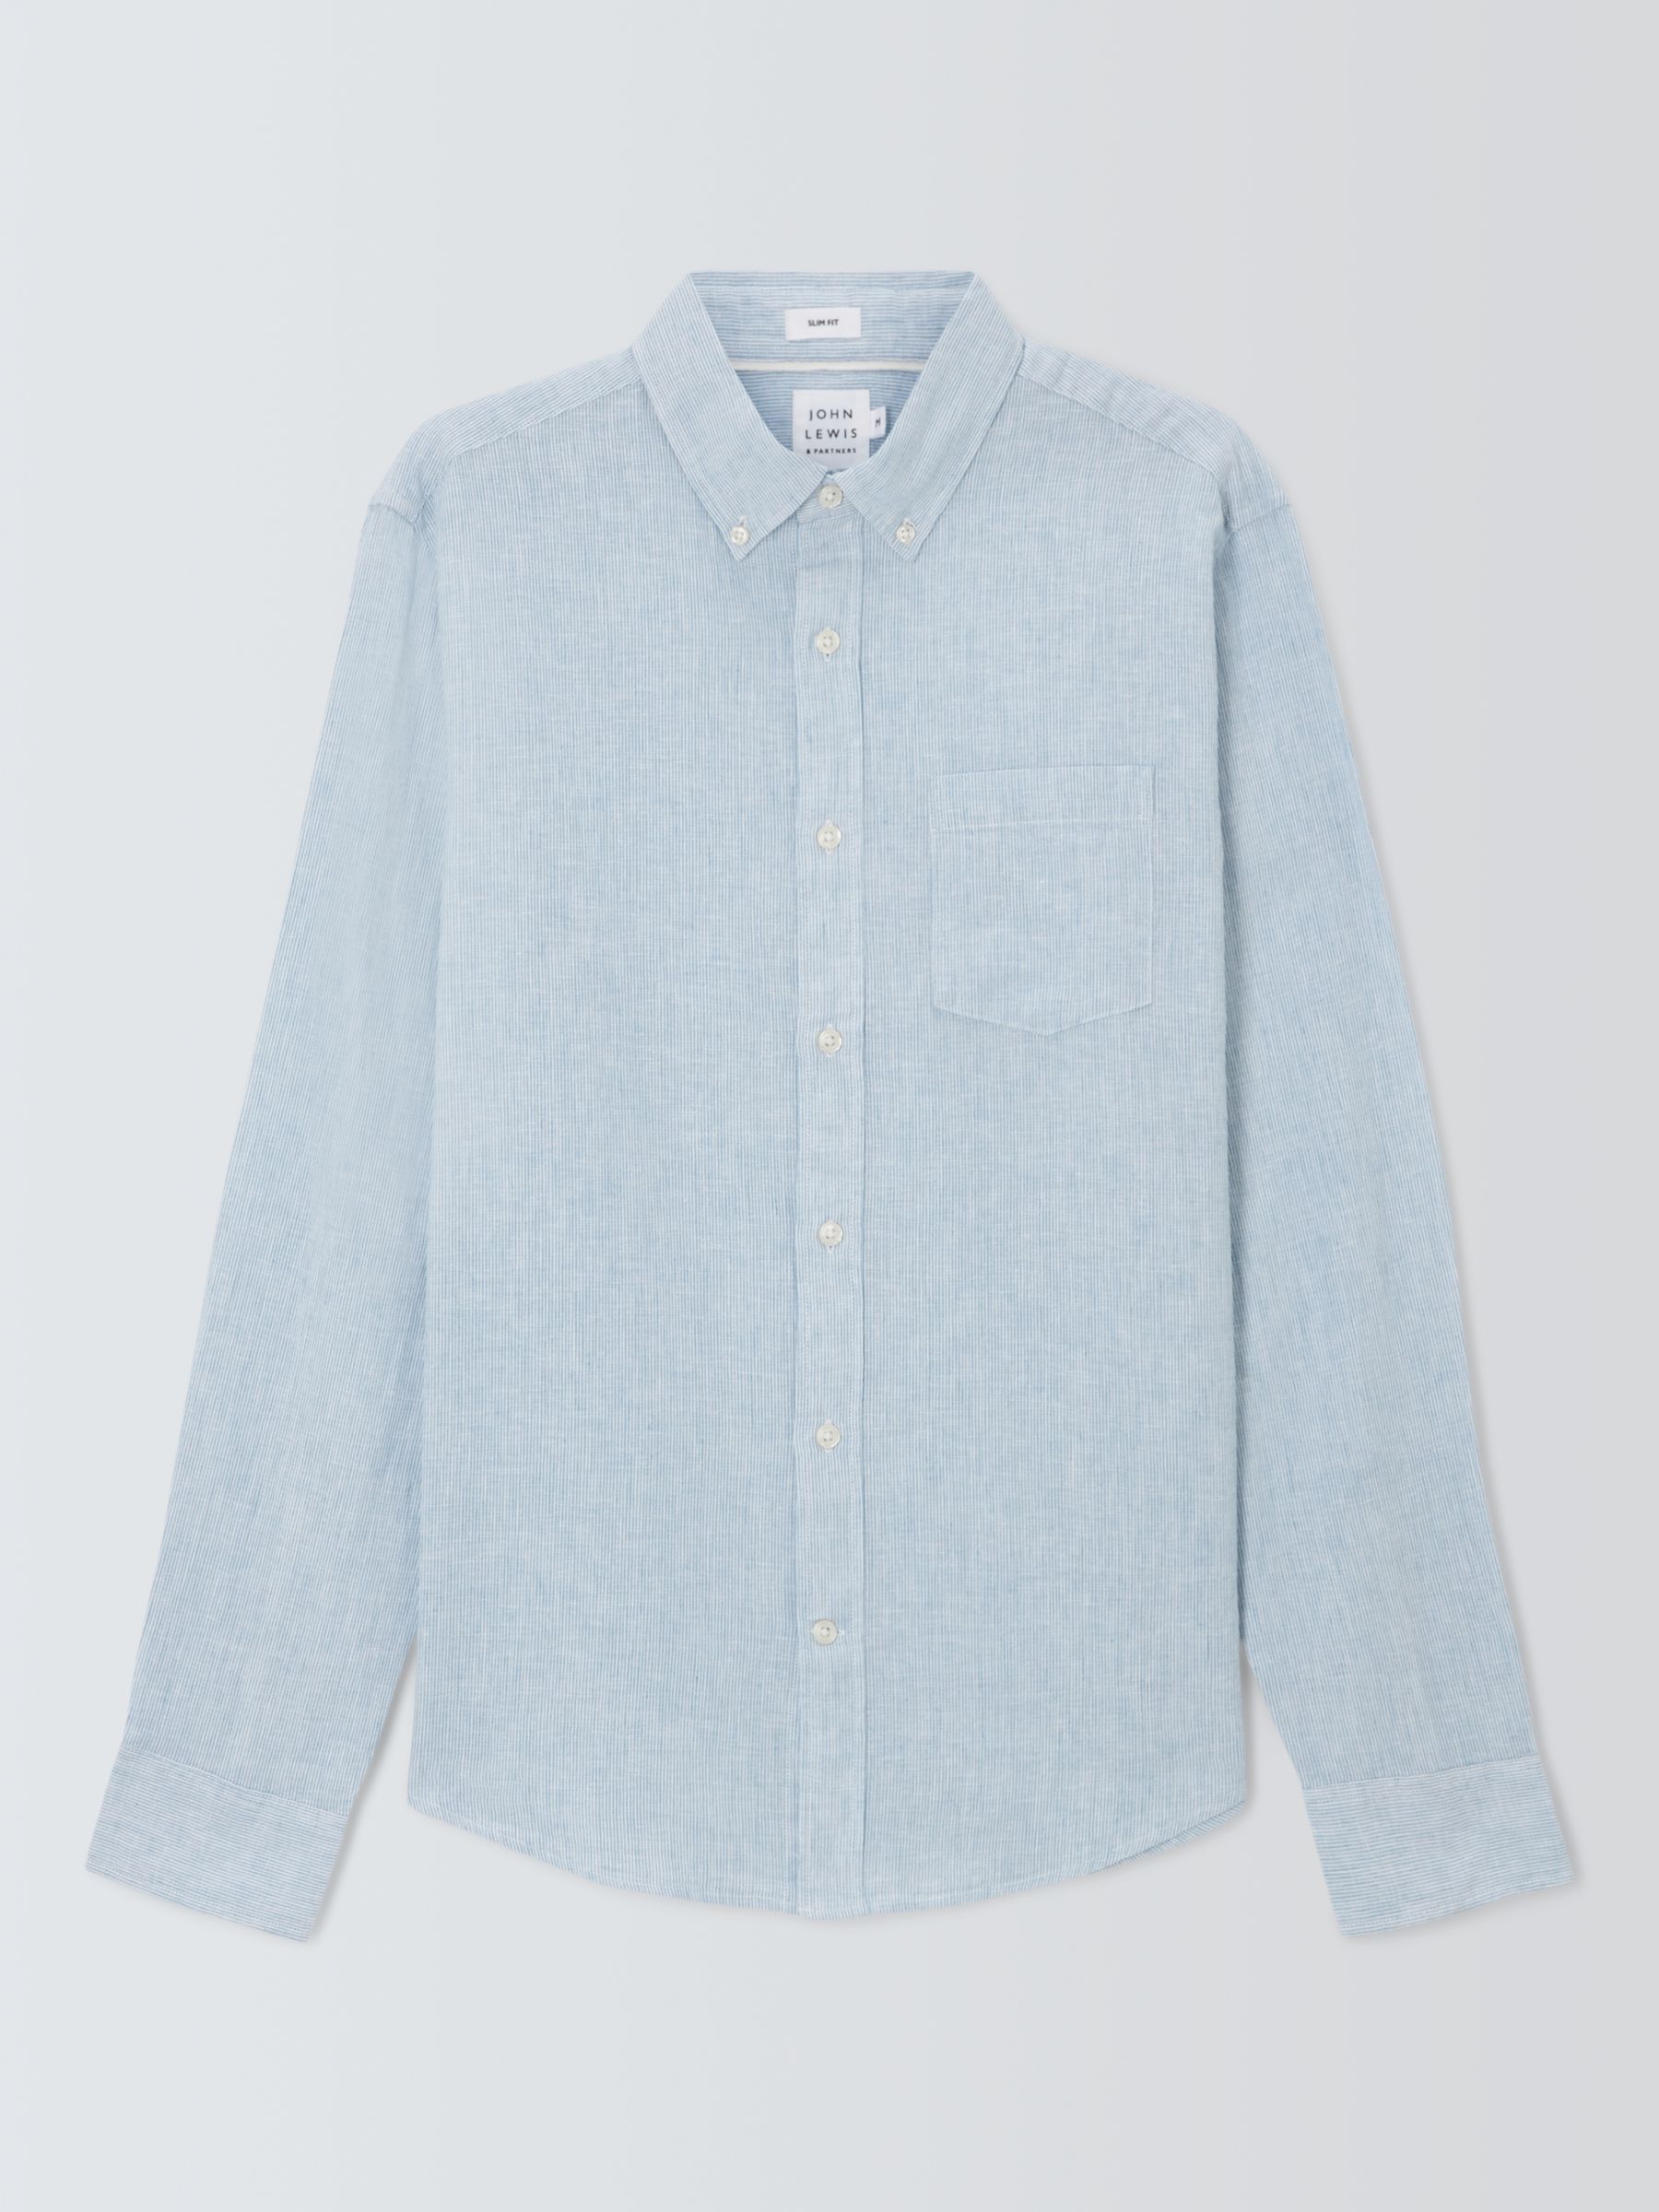 John Lewis Linen Blend Micro Stripe Long Sleeve Shirt, Blue, S